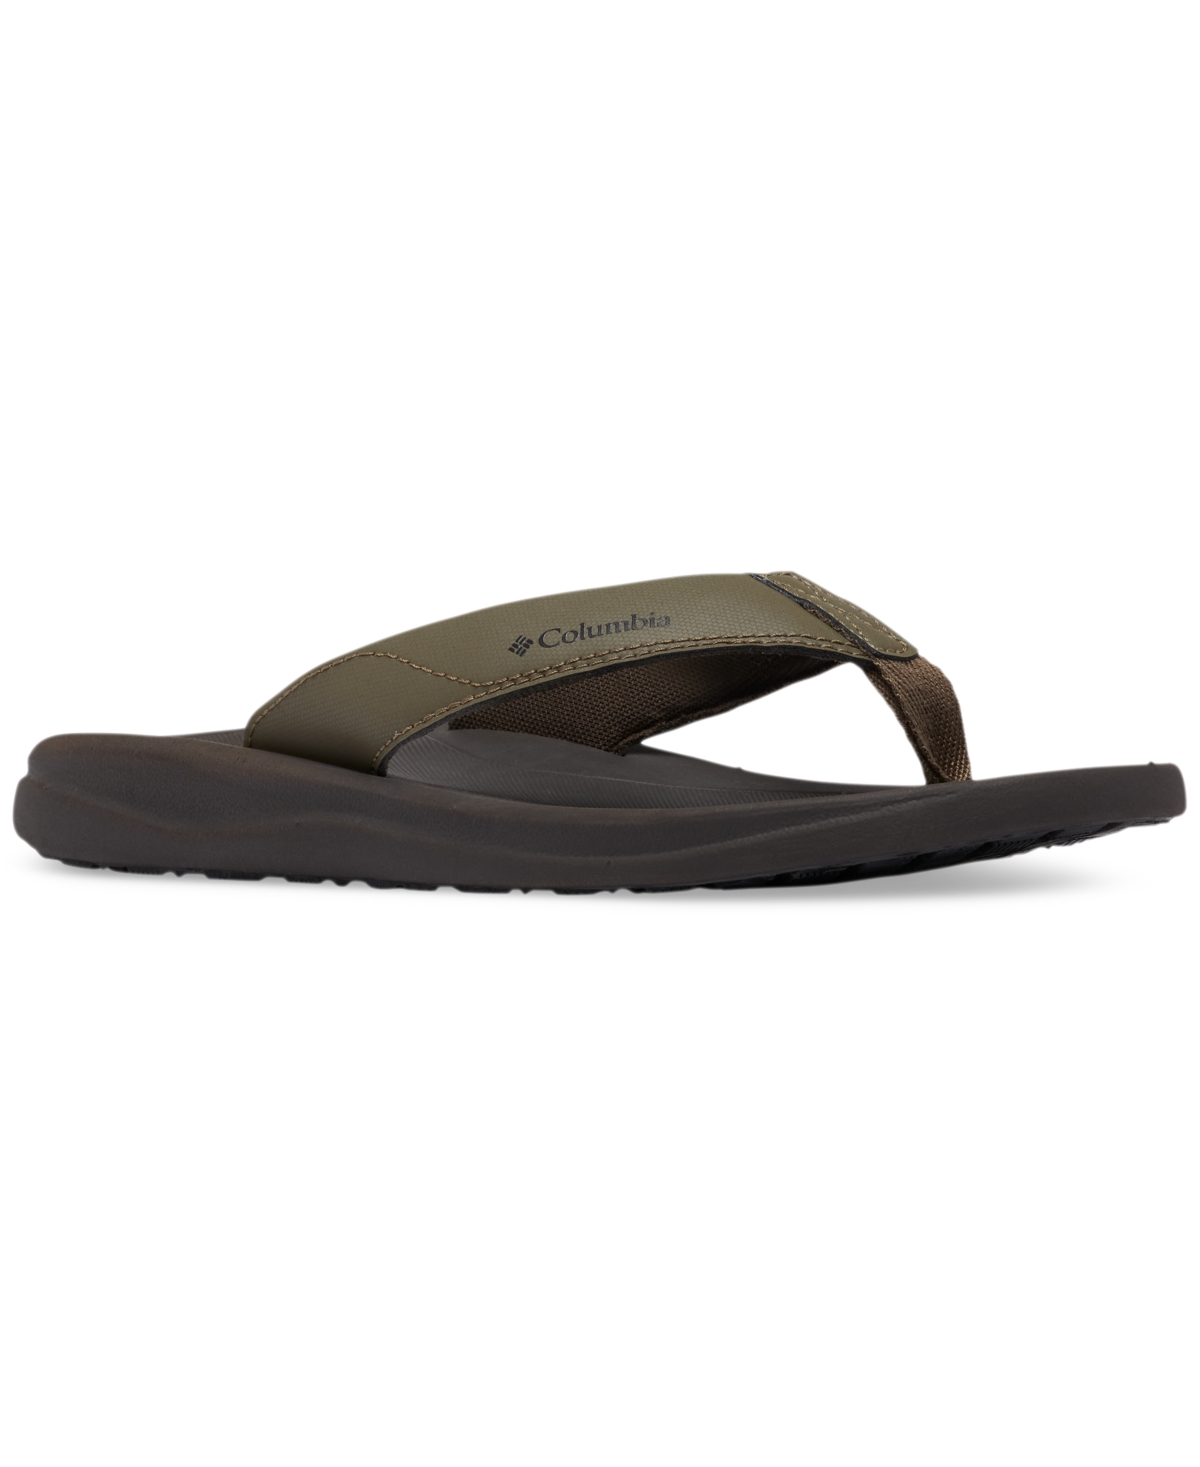 Men's Flip-Flop Sandal - Mud, Cordovan